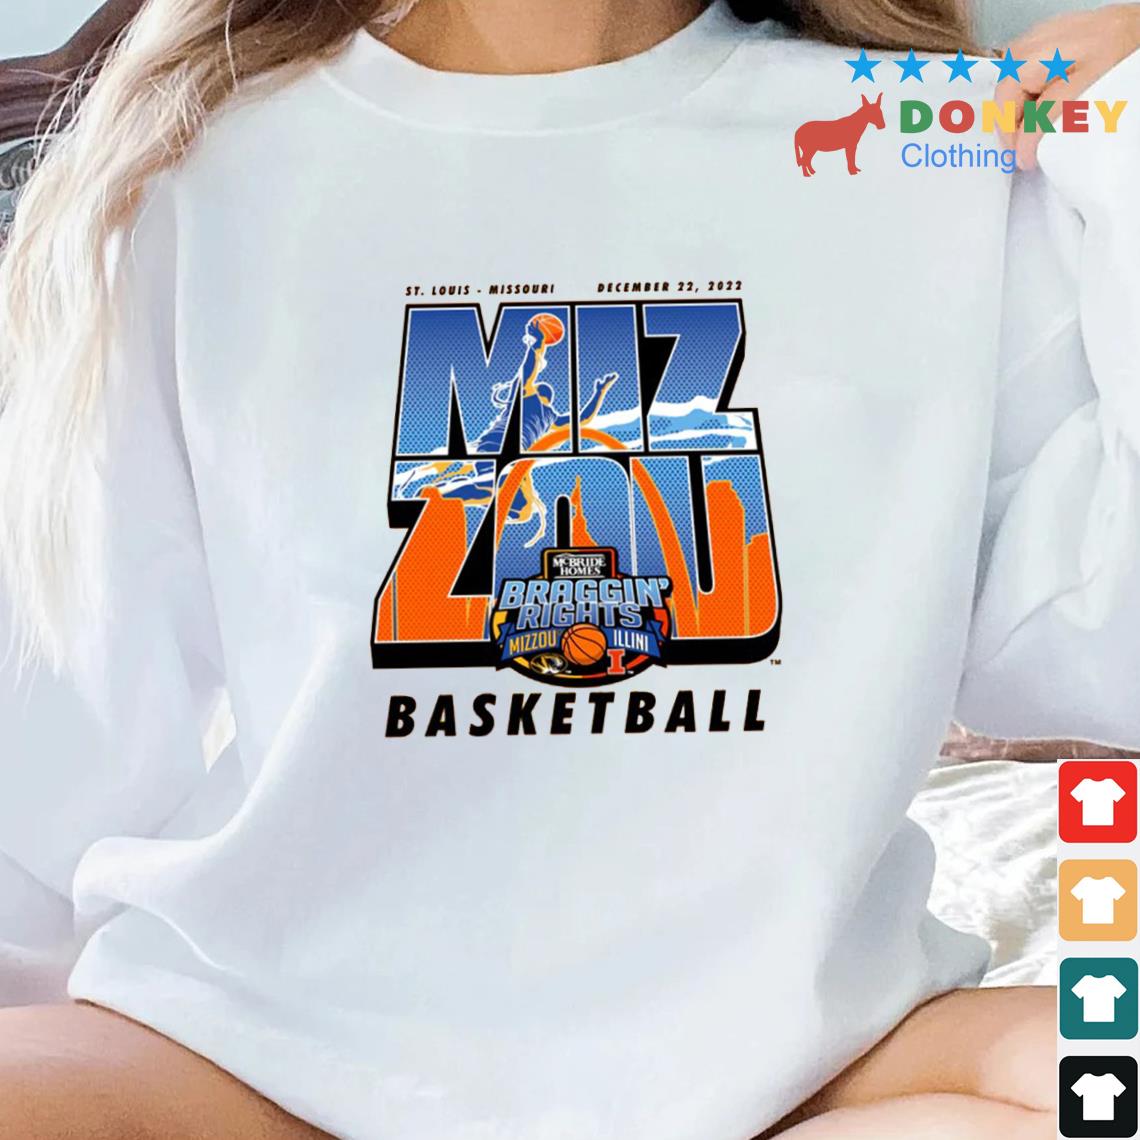 Mizzou Tigers Vs Illinois Braggin Rights 2022 Basketball Game Gold Shirt